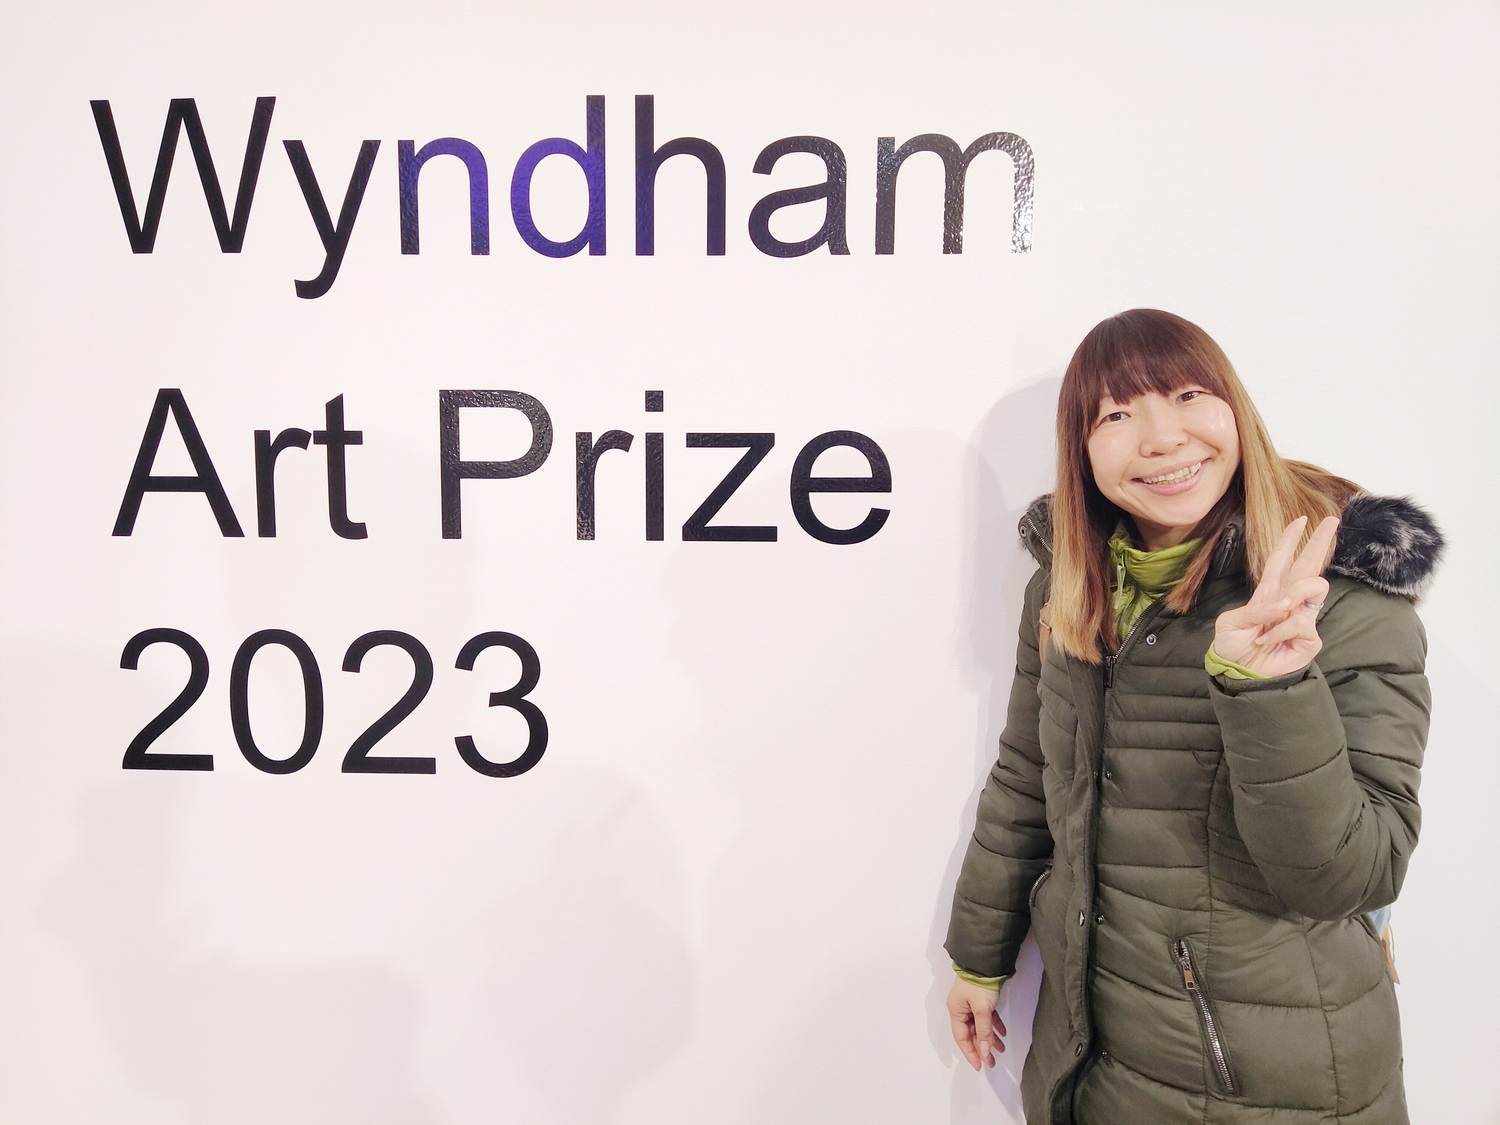 Wyndham Art Prize 2023